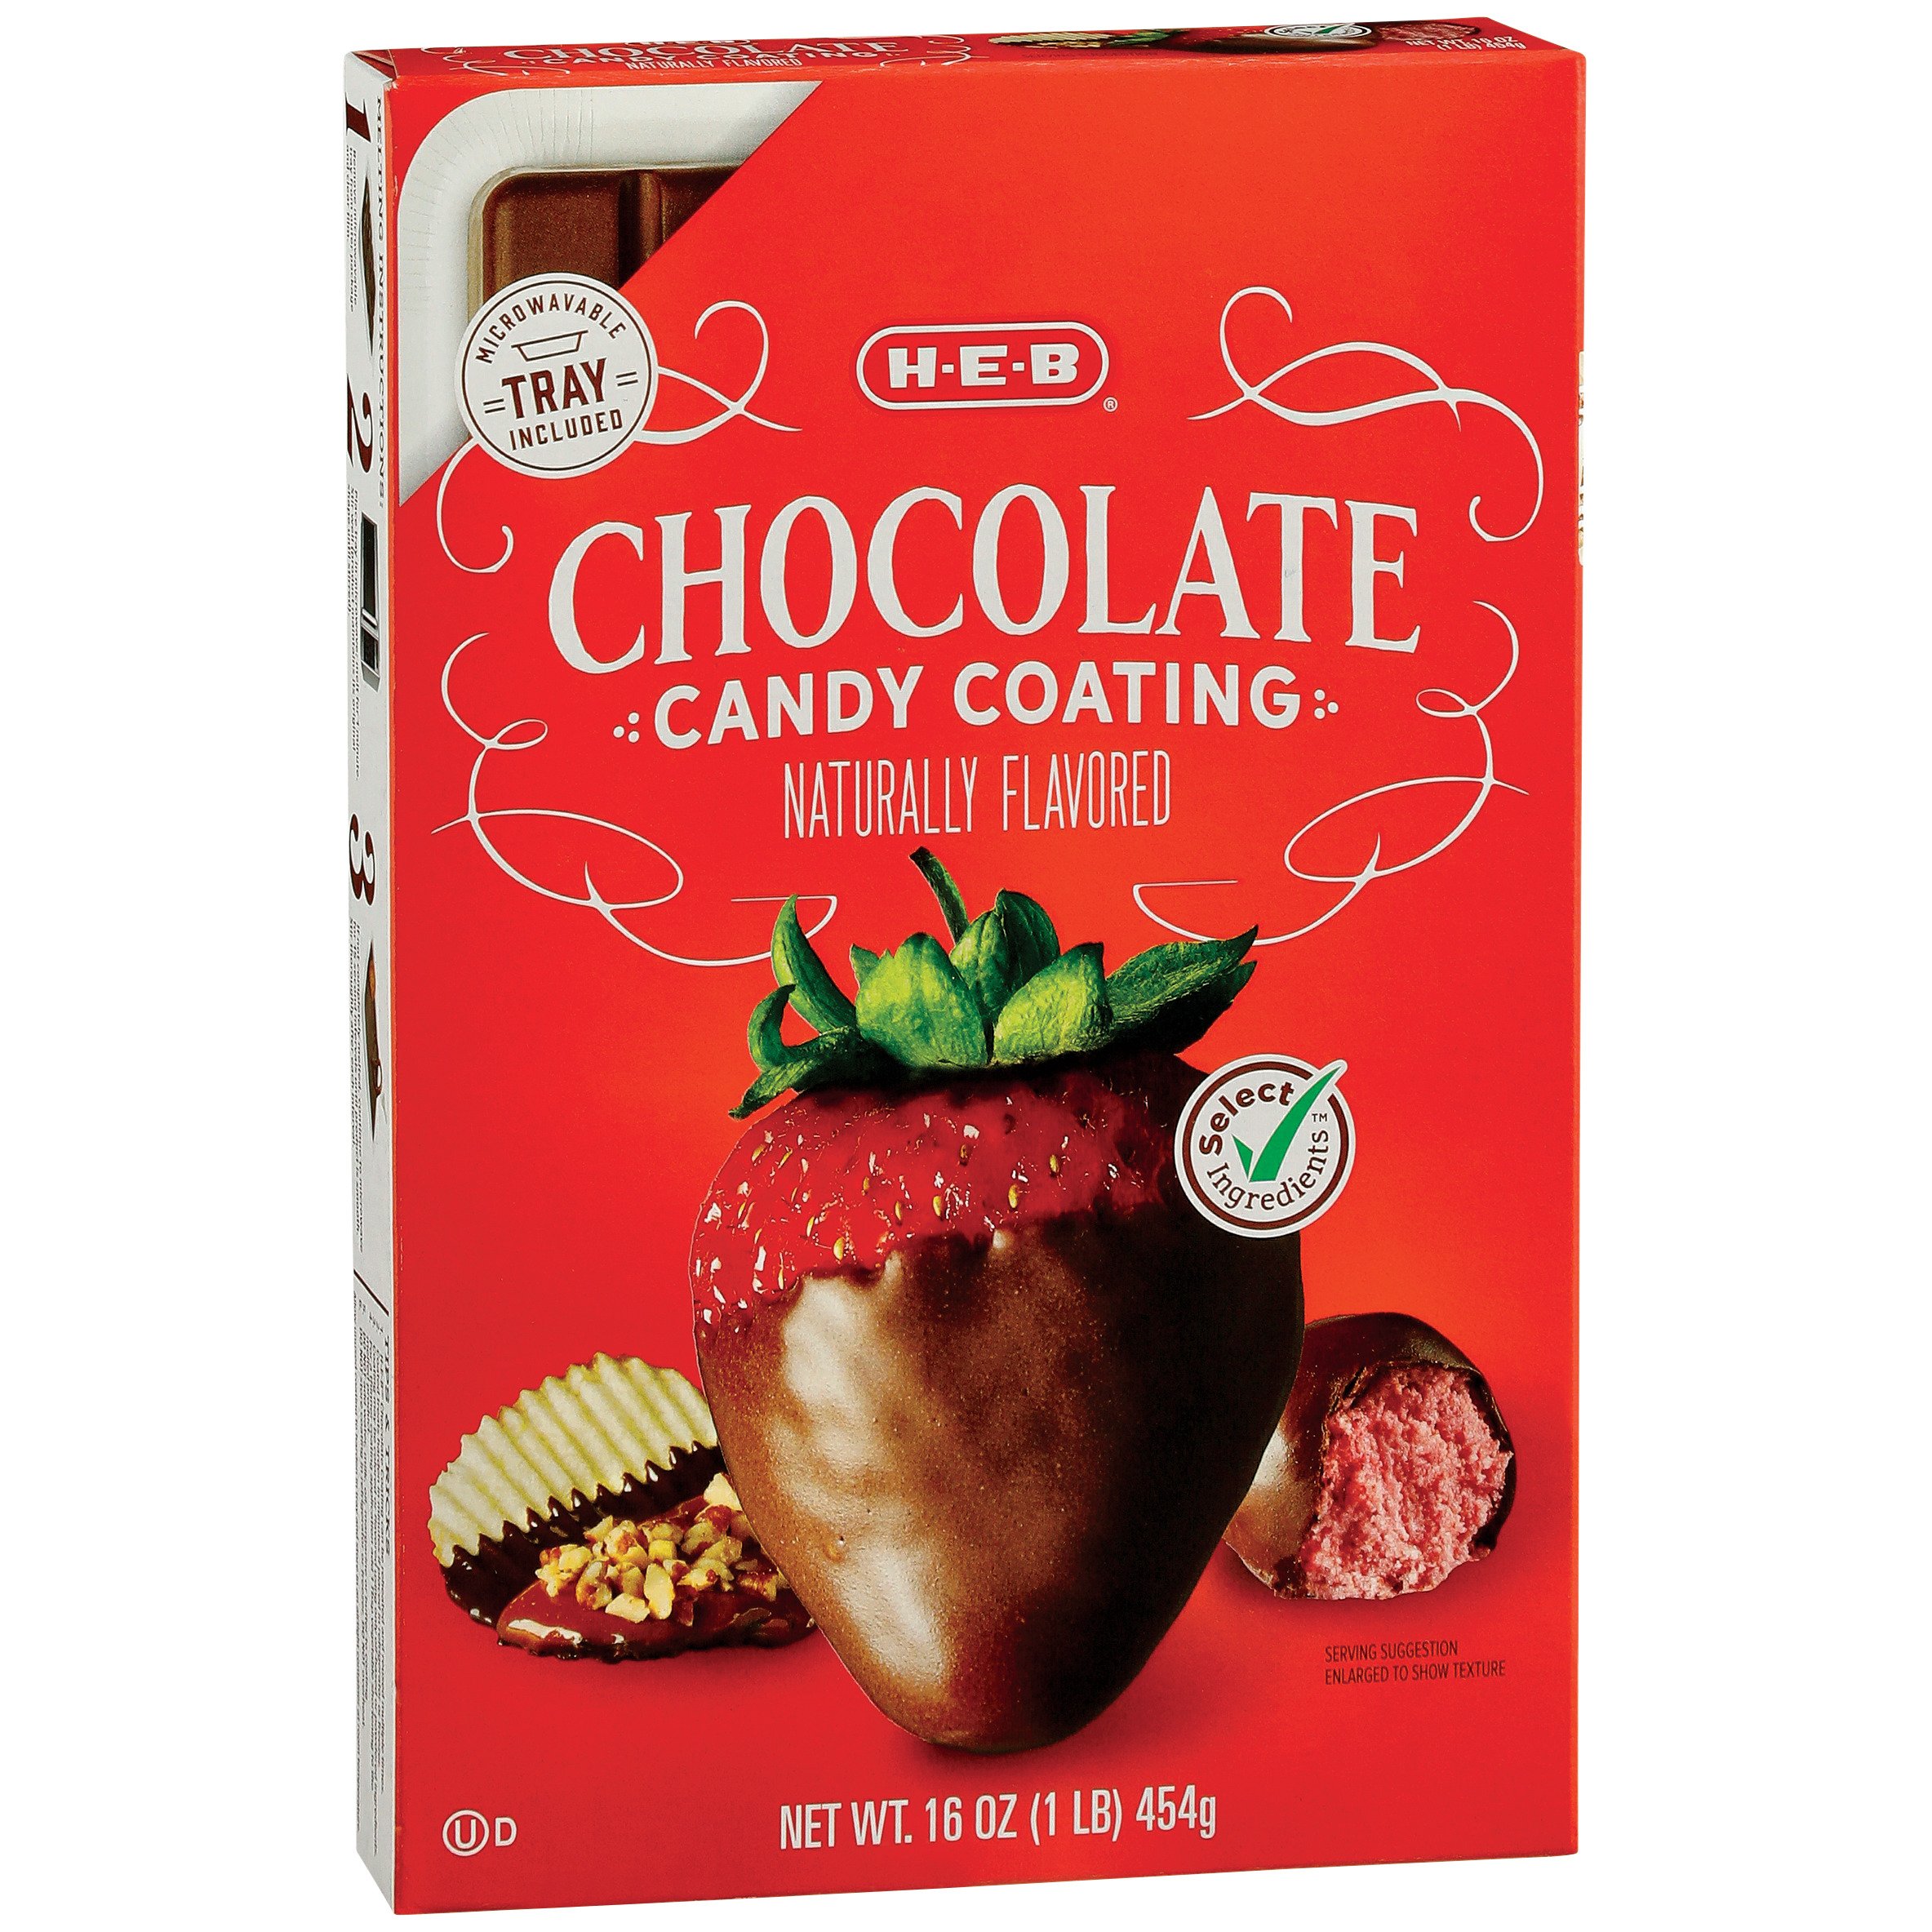 Candiquick Chocolate Vanilla Flavored Melt & Make Microwaveable Tray 16 Oz